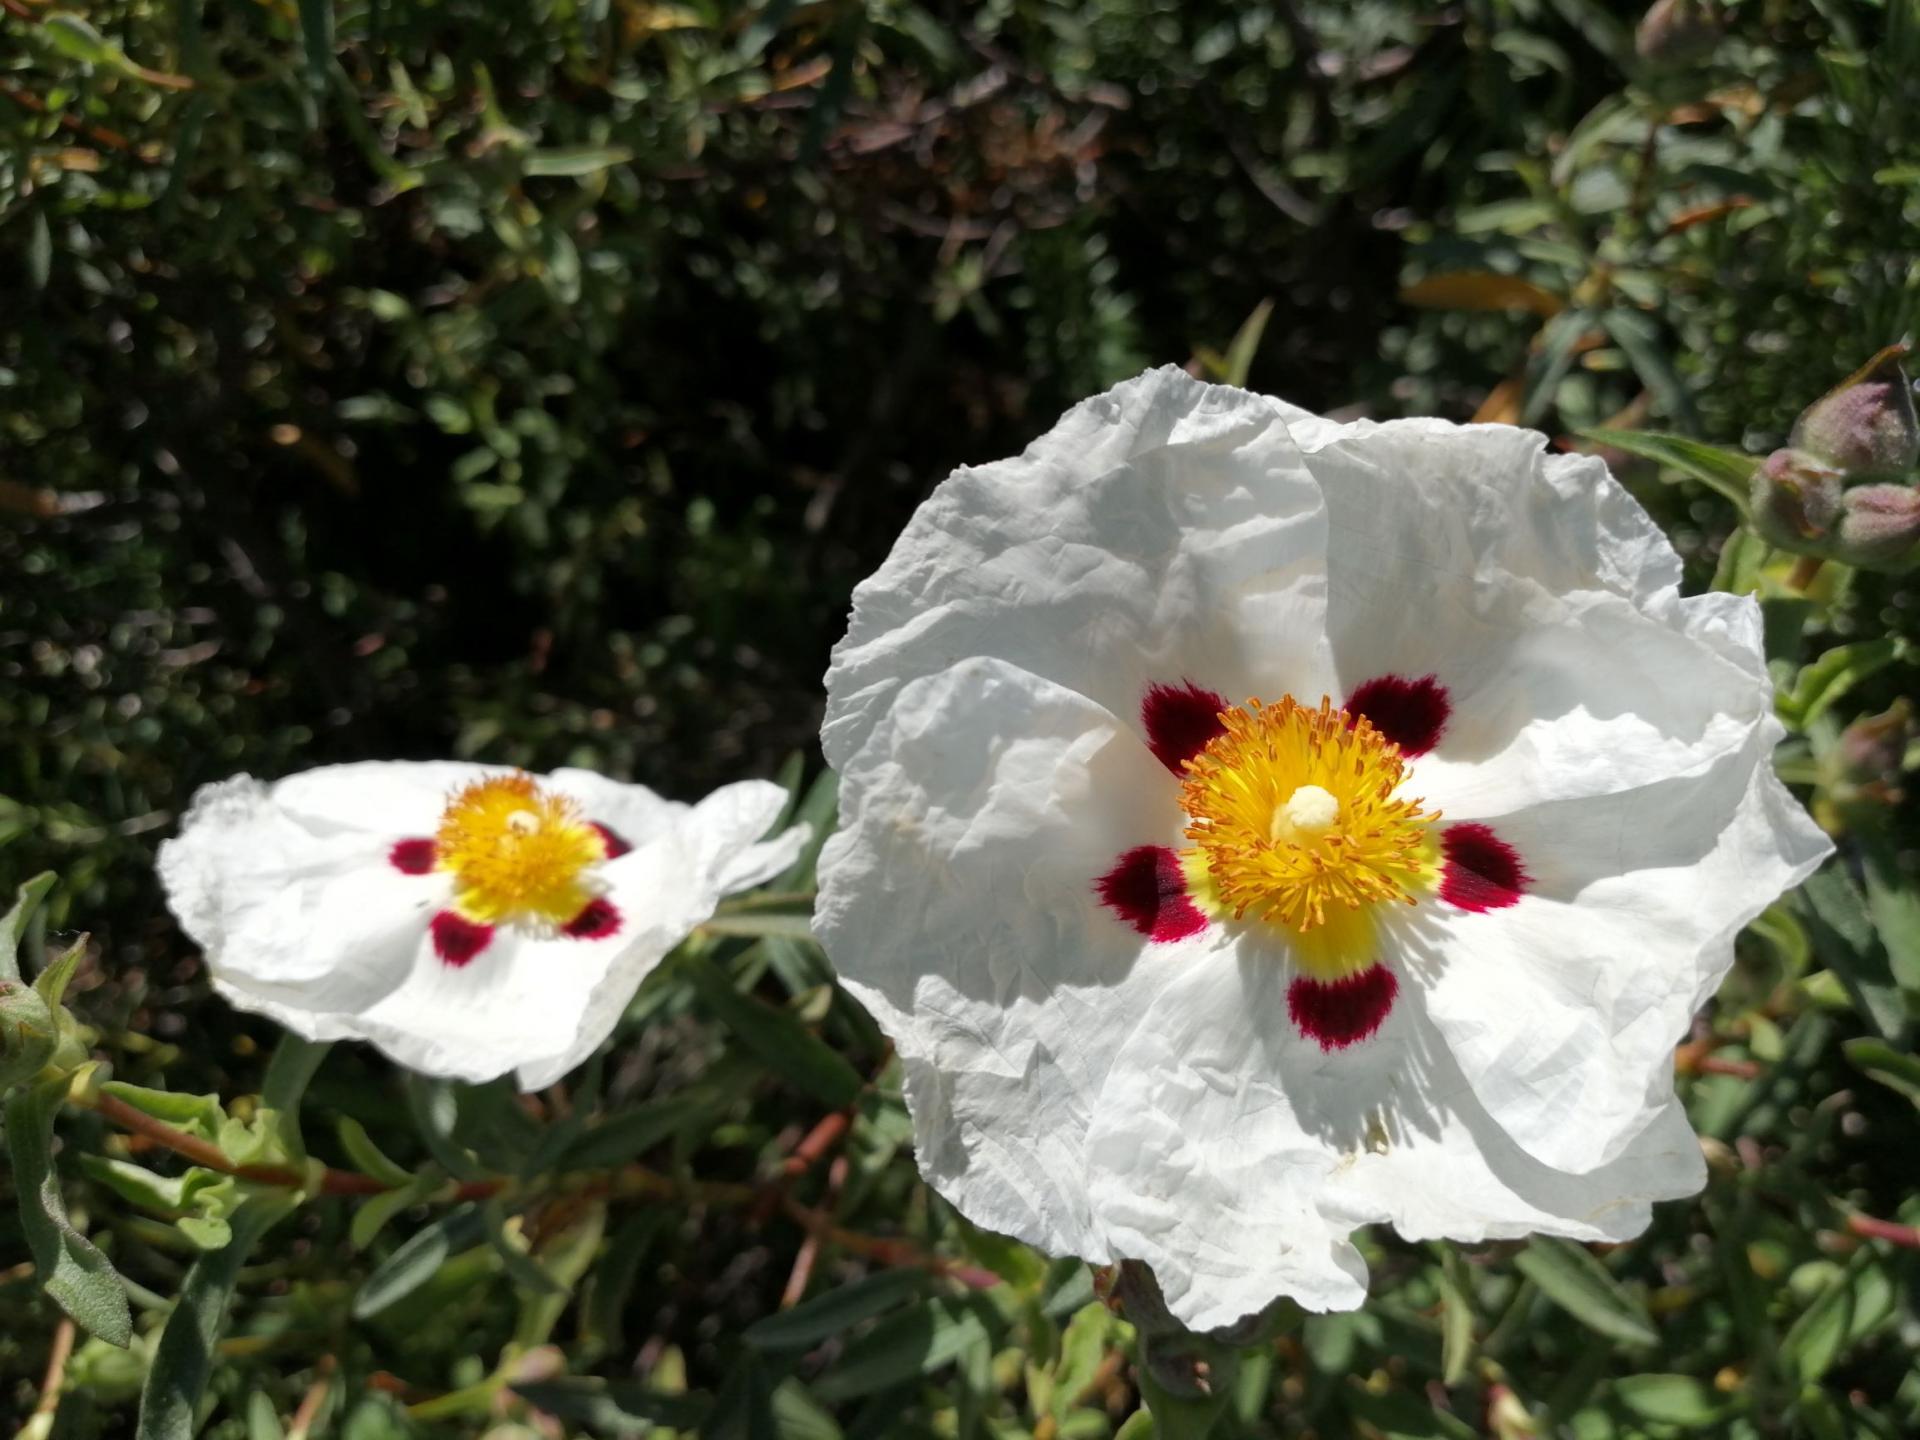 Maison de vacances avec jardin fleuri : la Ciste méditérranéenne